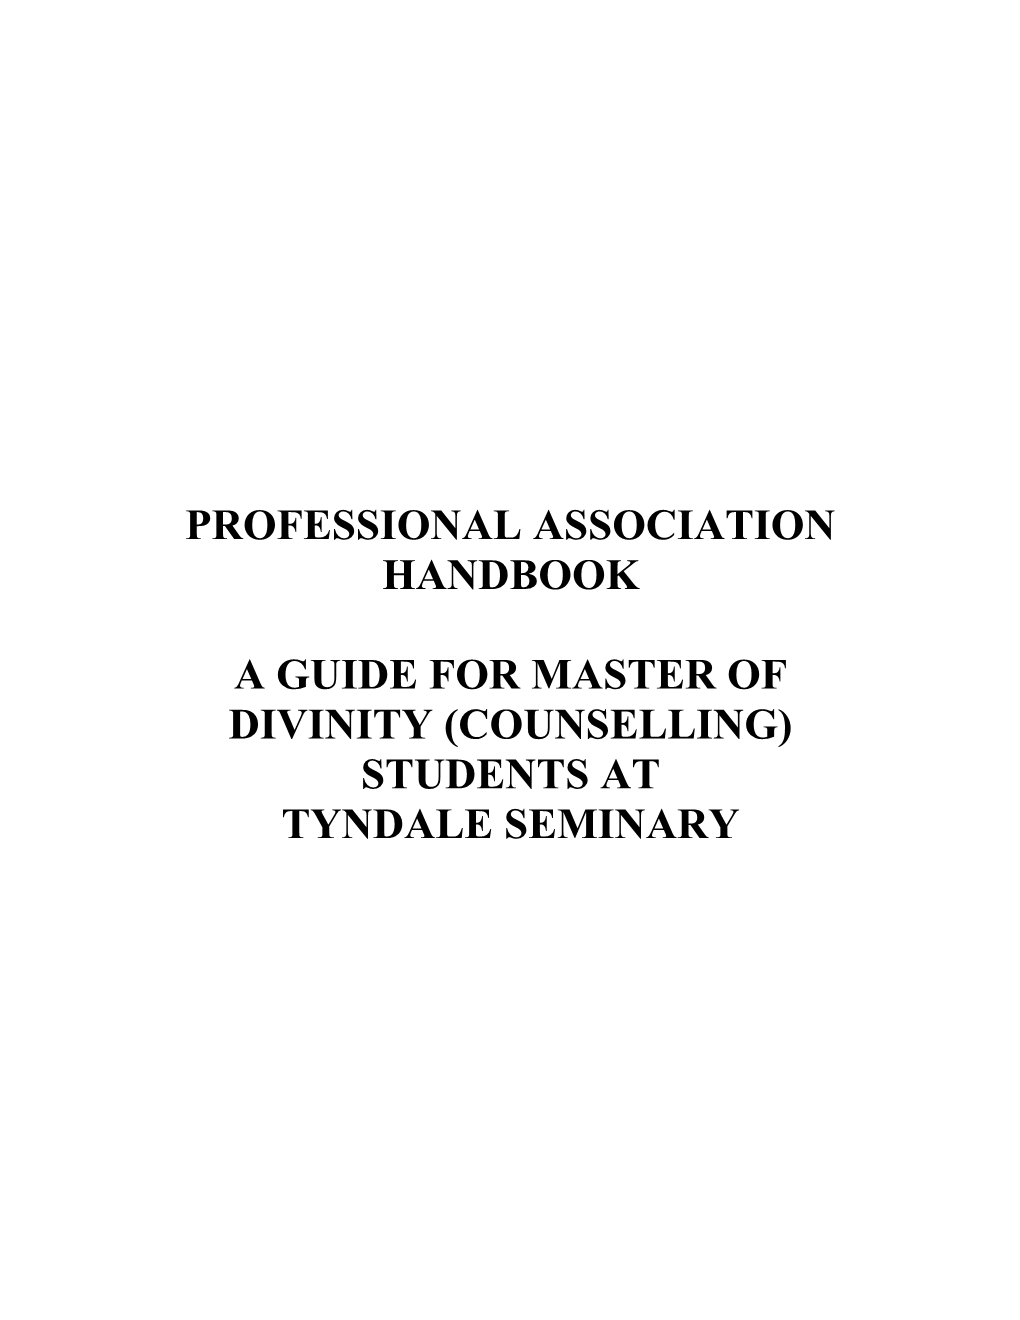 Professional Association Handbook